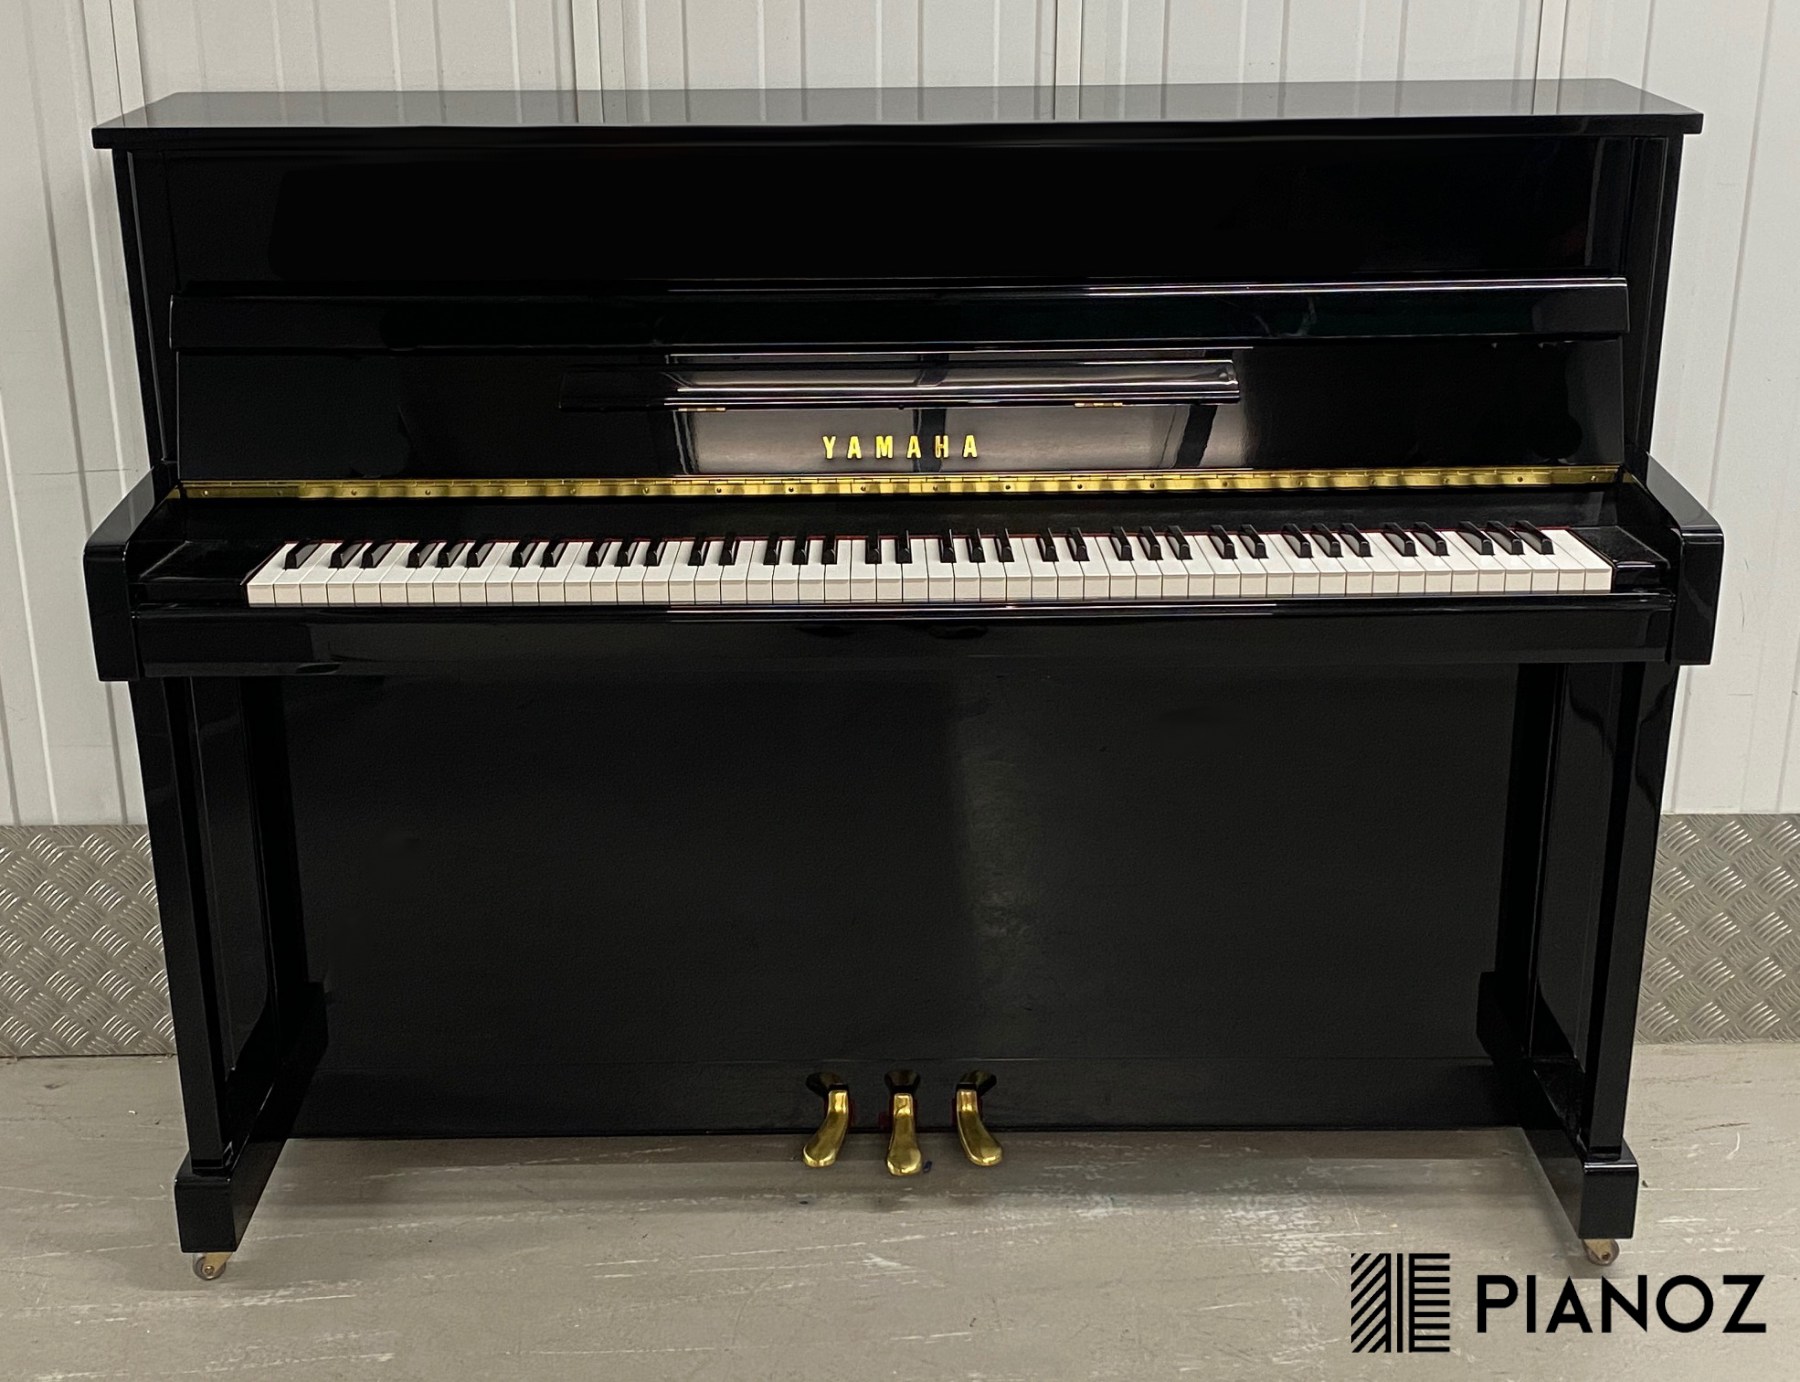 Yamaha B2 Polished Ebony Upright Piano piano for sale in UK